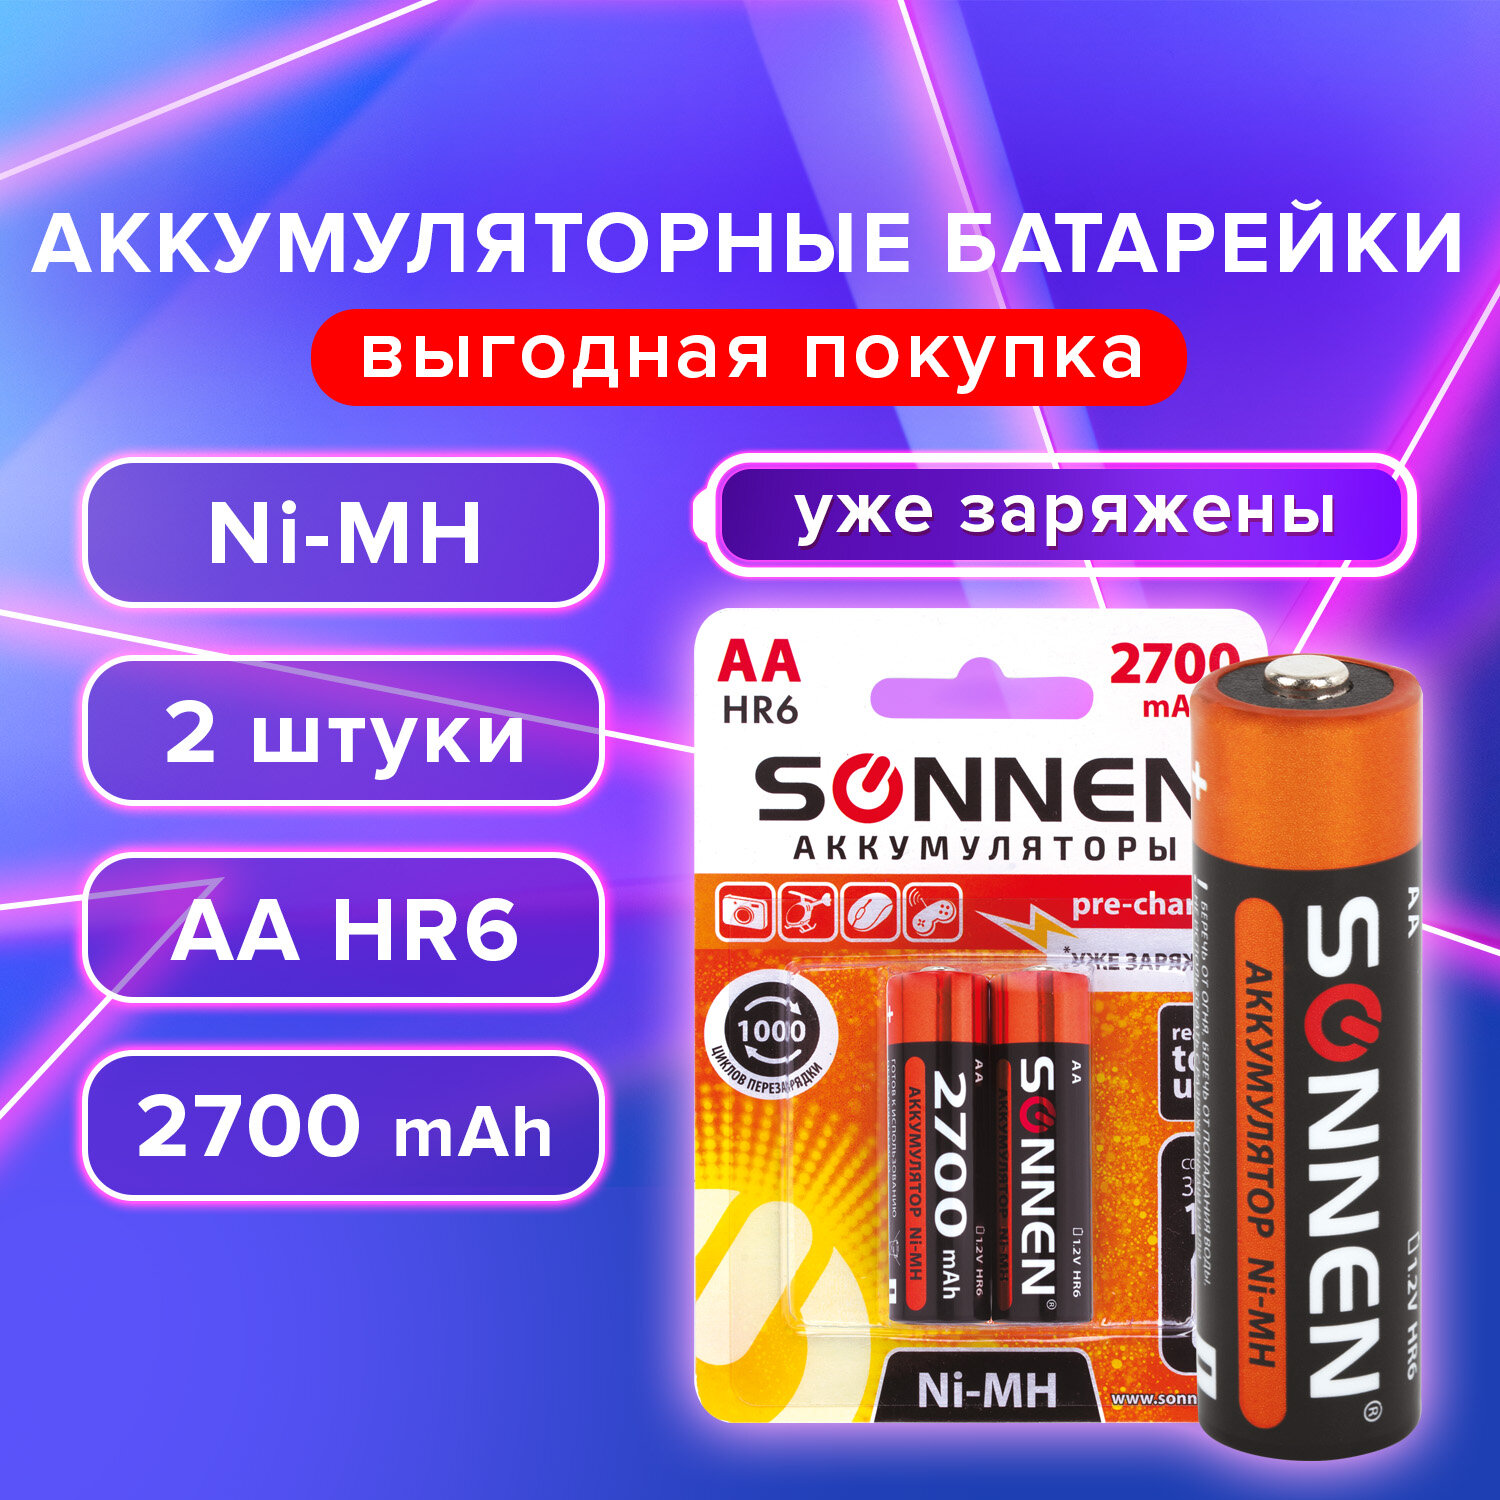 Sonnen Батарейки аккумуляторные SONNEN 454235, АА (HR6), Ni-Mh, 2700 mAh, в блистере 2 шт., комплект 2 упаковки